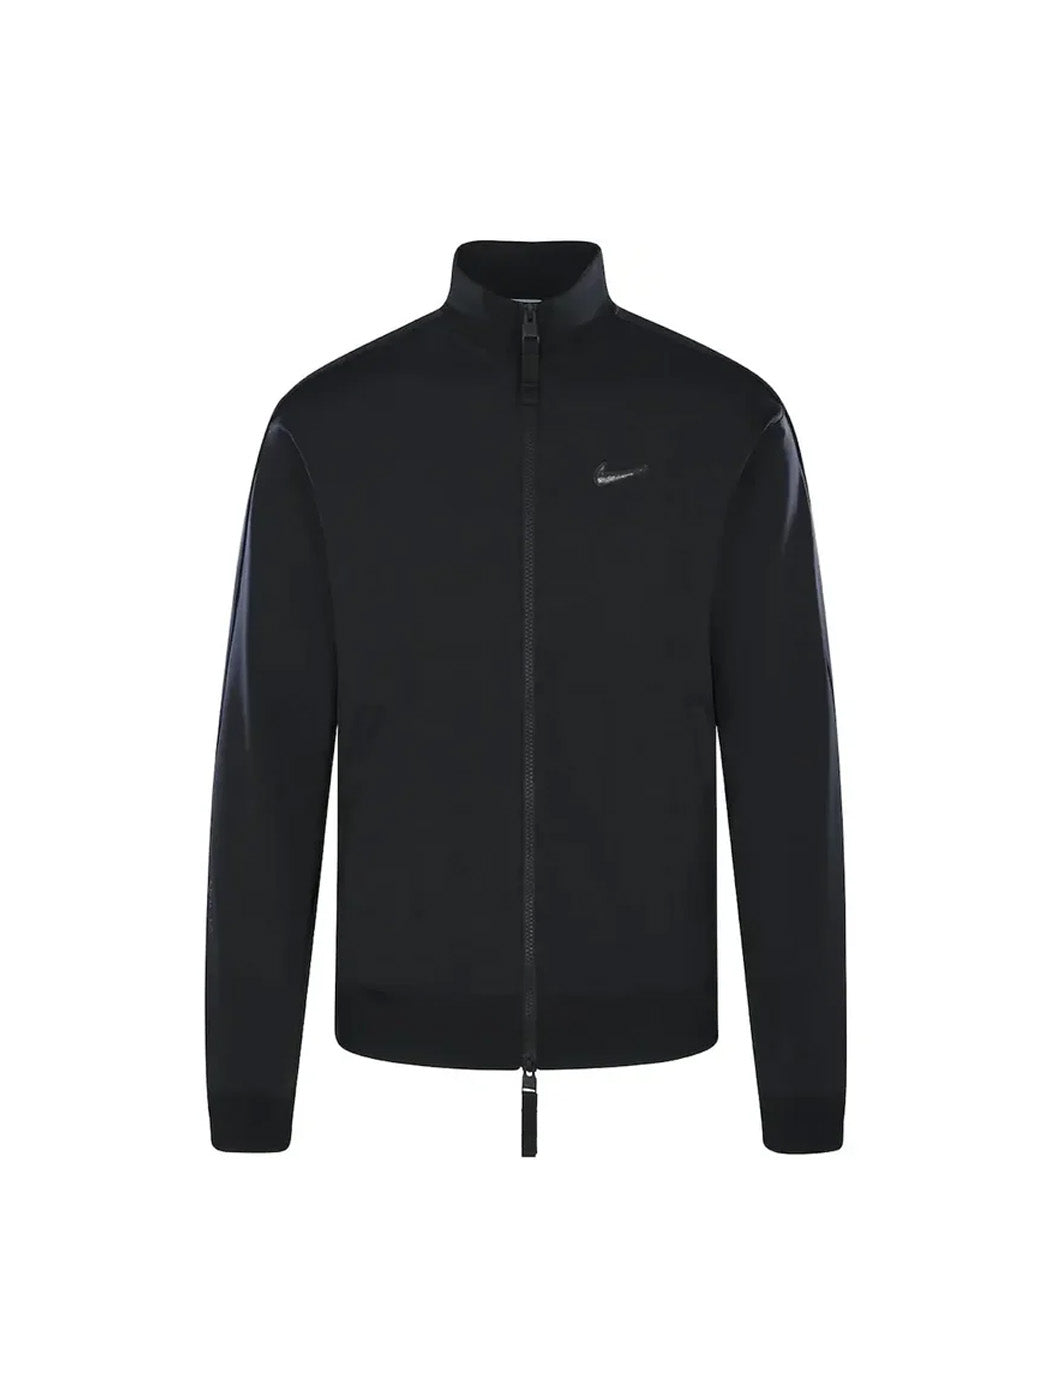 Nike x NOCTA Swoosh Swarovski Crystals Jacket Black